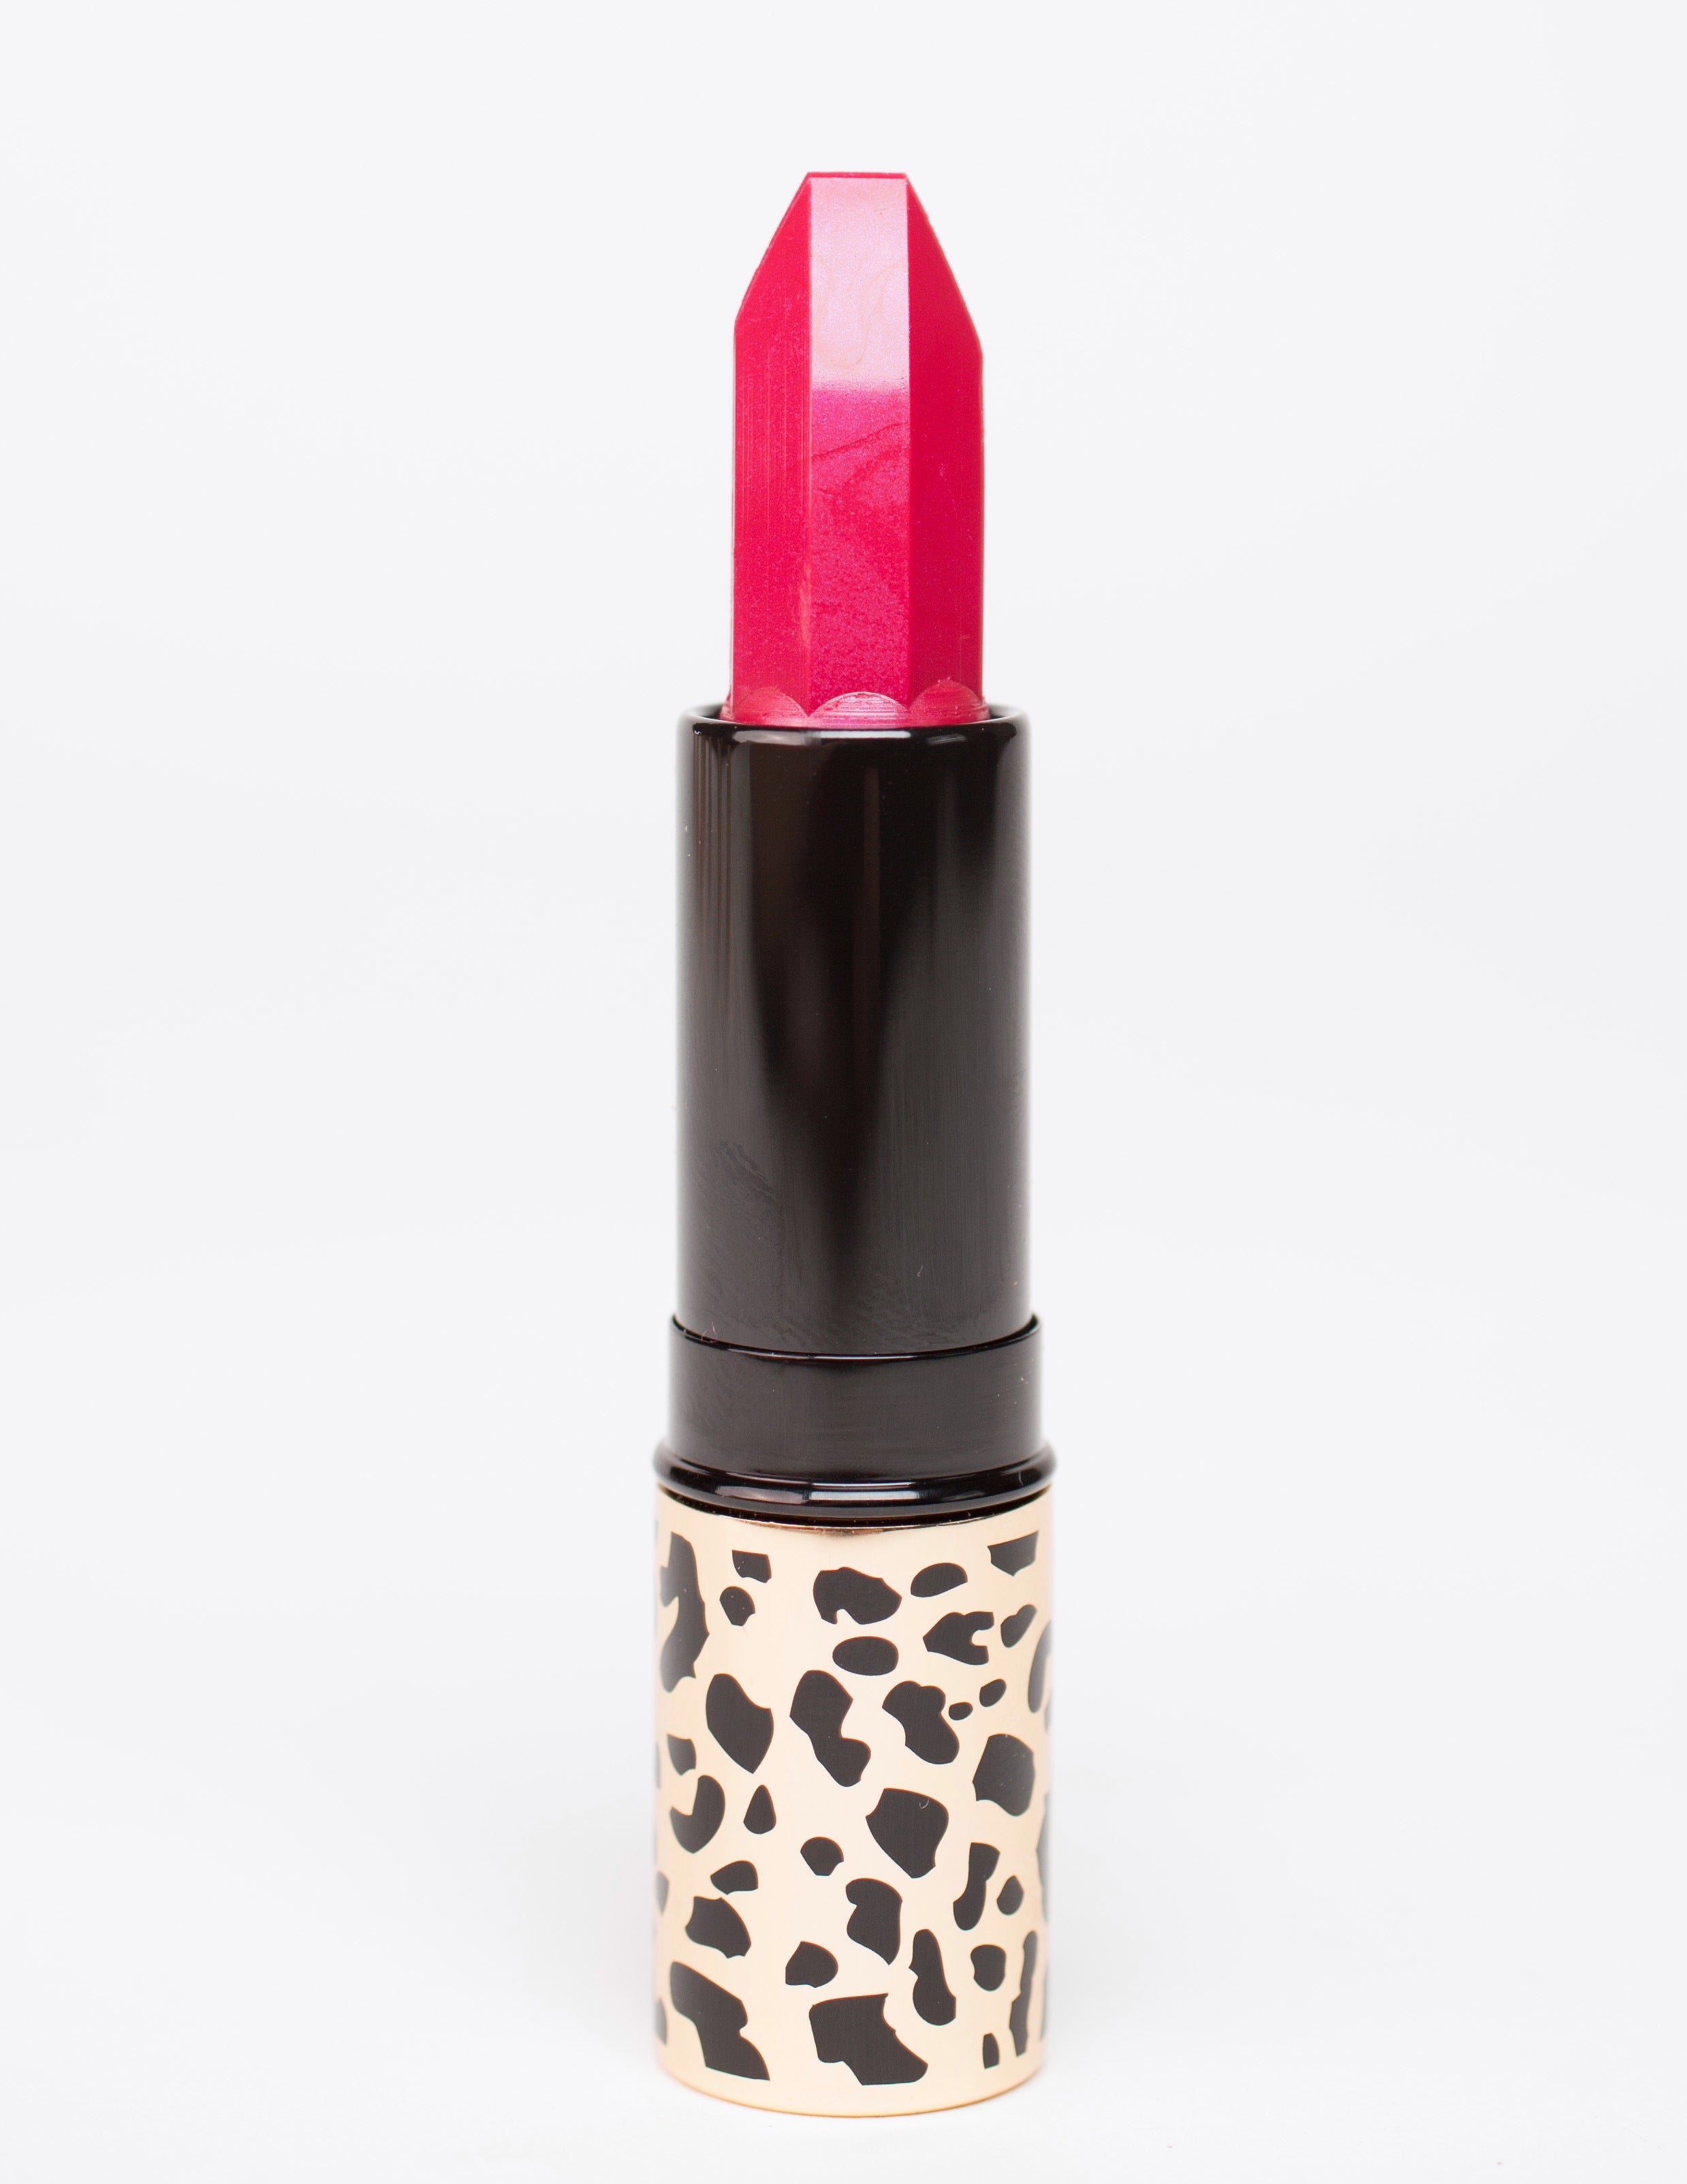 LTW Vargas Girl Deep Pink Lipstick Swatch